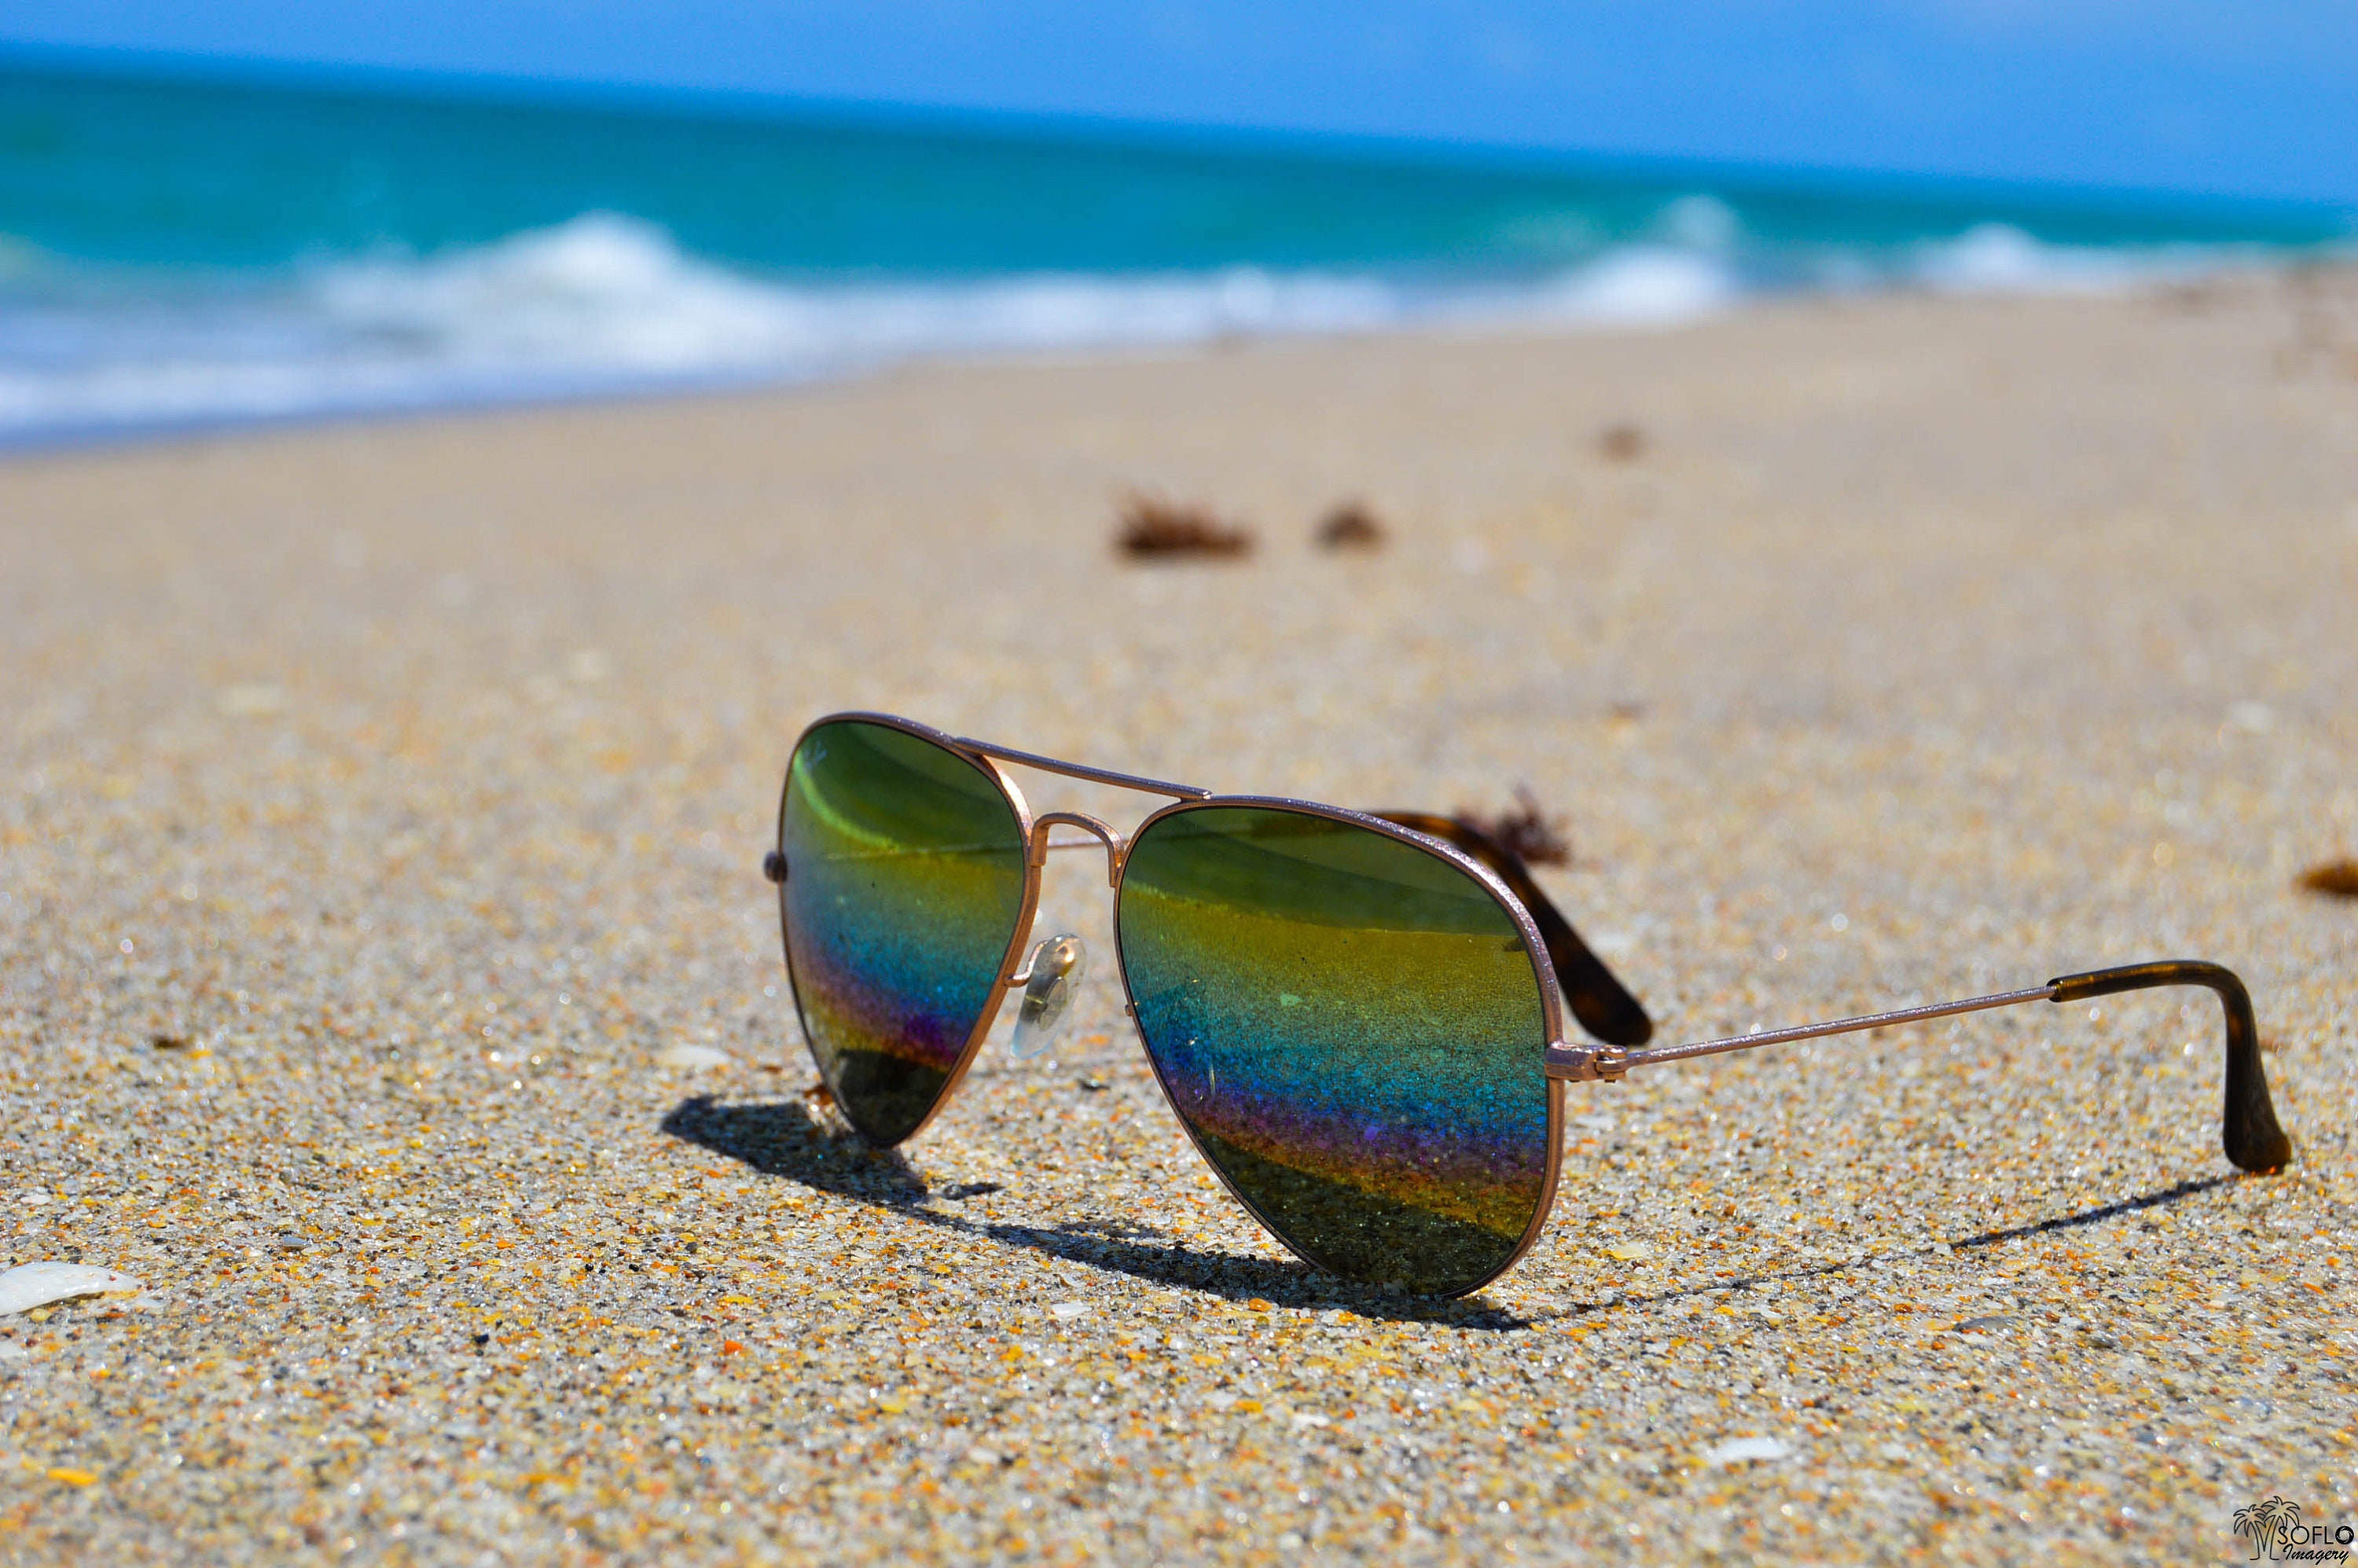 Sunglasses On The Beach